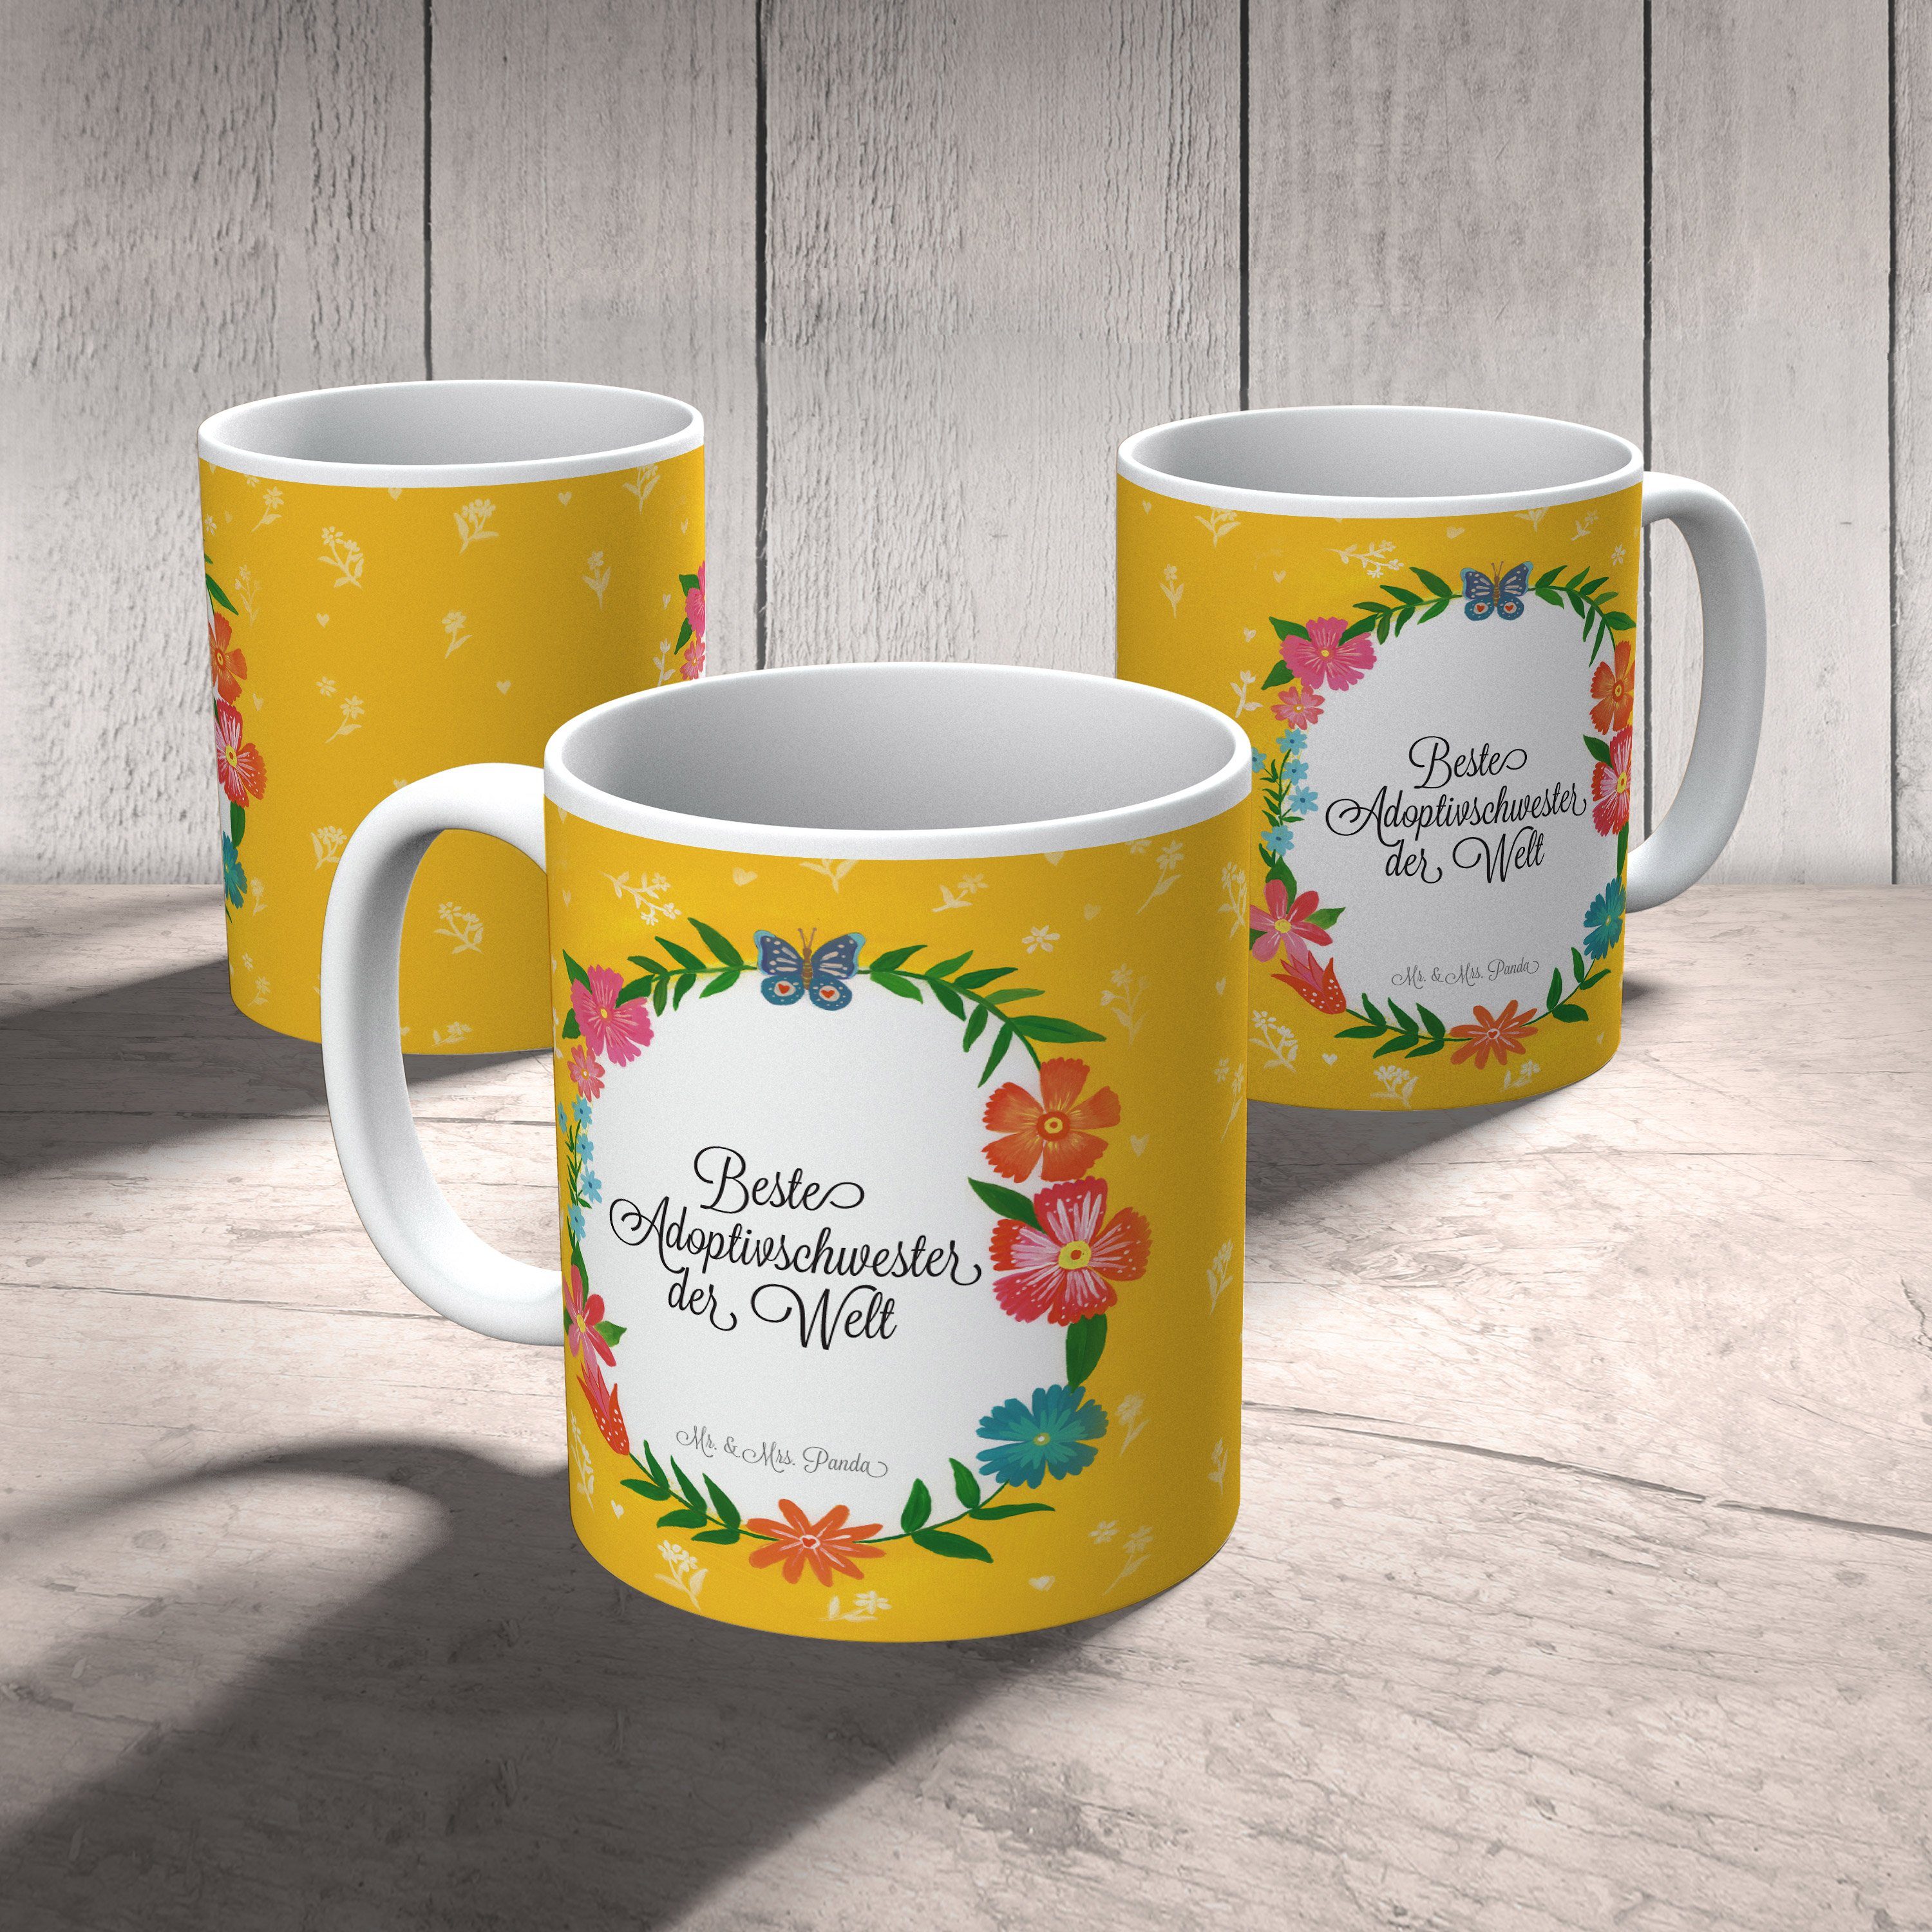 Keramik Teet, & - Geschenk Tasse, adoptiert, Adoptivschwester Tasse Panda Mrs. Mr. Geschenk, Familie,